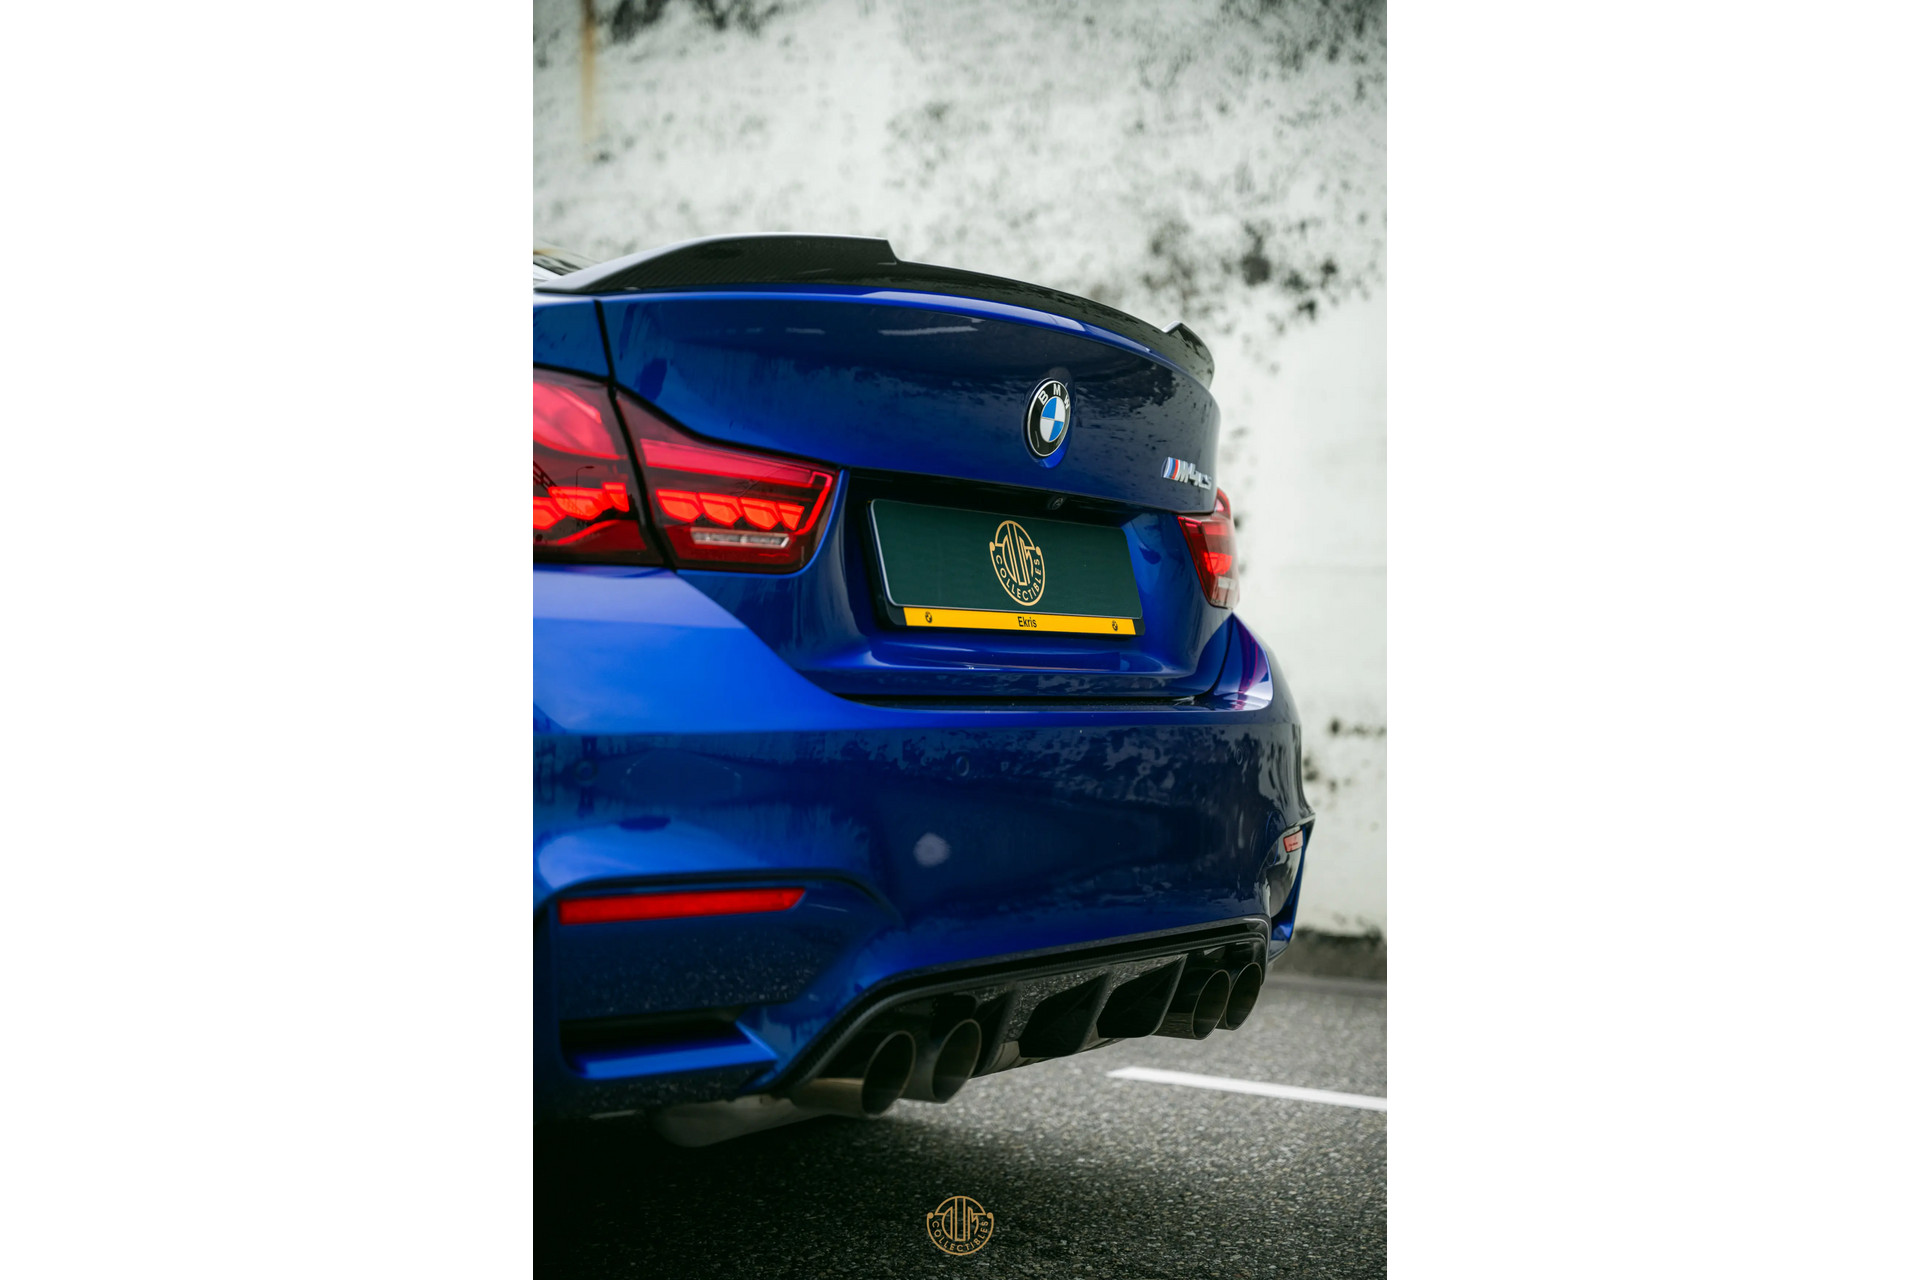 BMW 4 Serie Coupé M4 CS 2017 San marino blau metallic 37